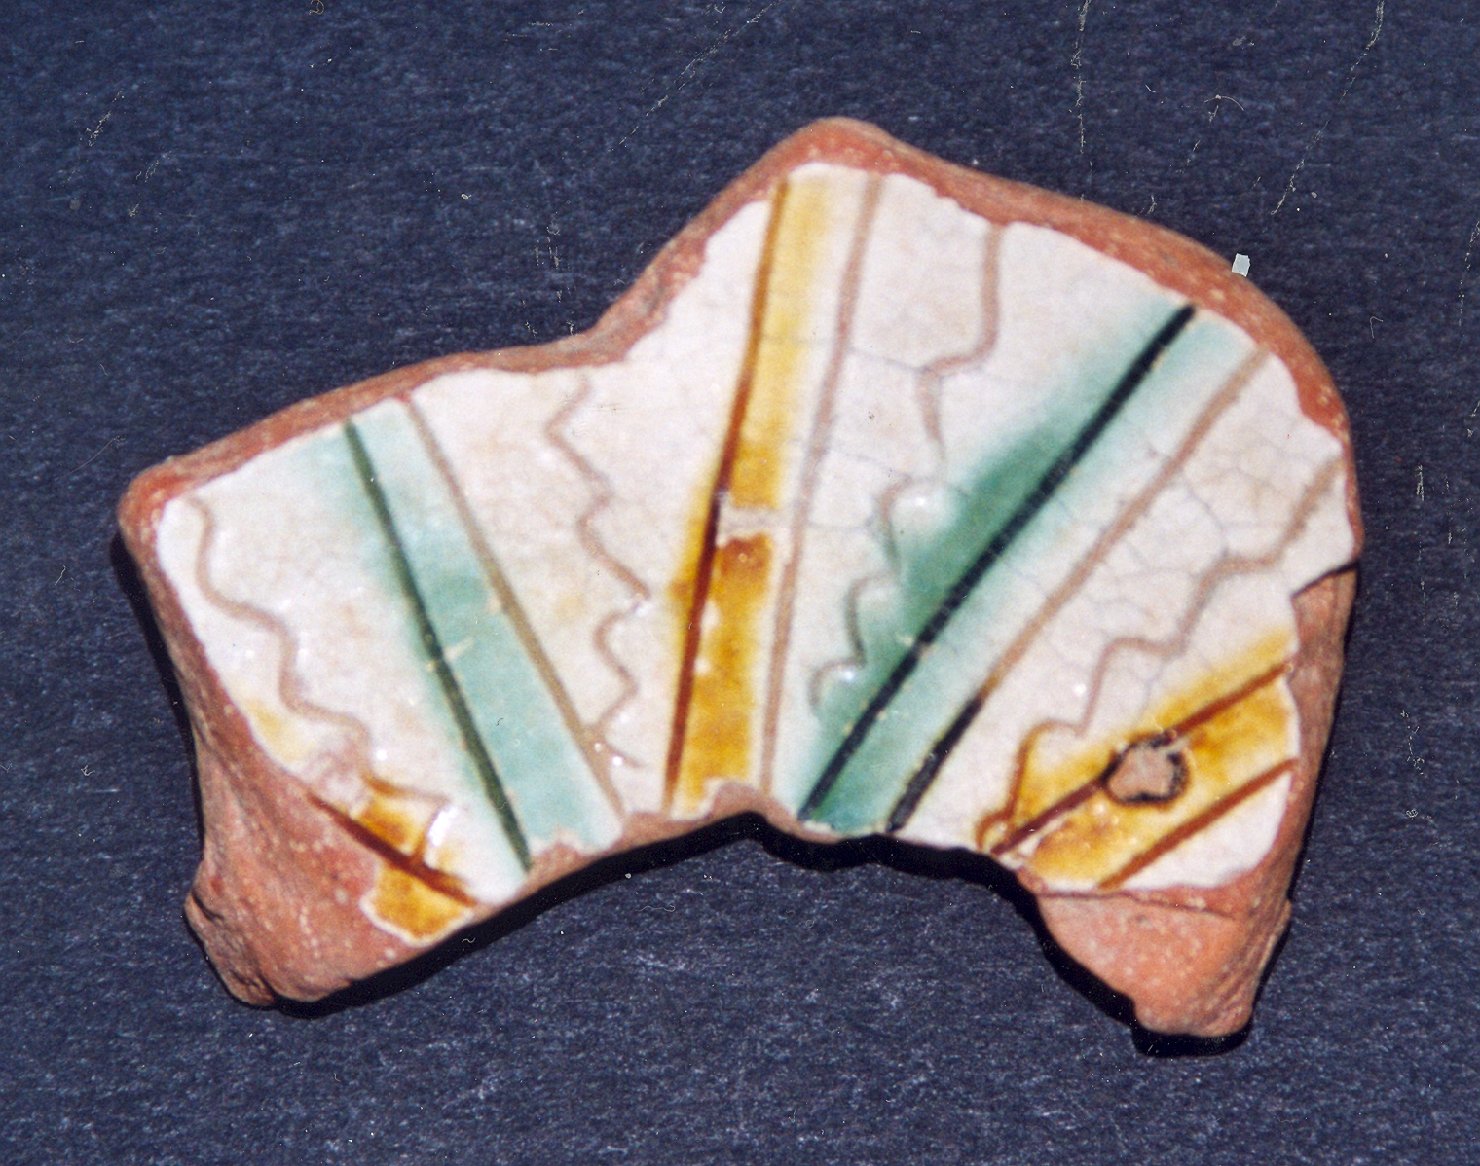 motivi decorativi geometrici (bacino, frammento) - manifattura veneziana (sec. XIV)